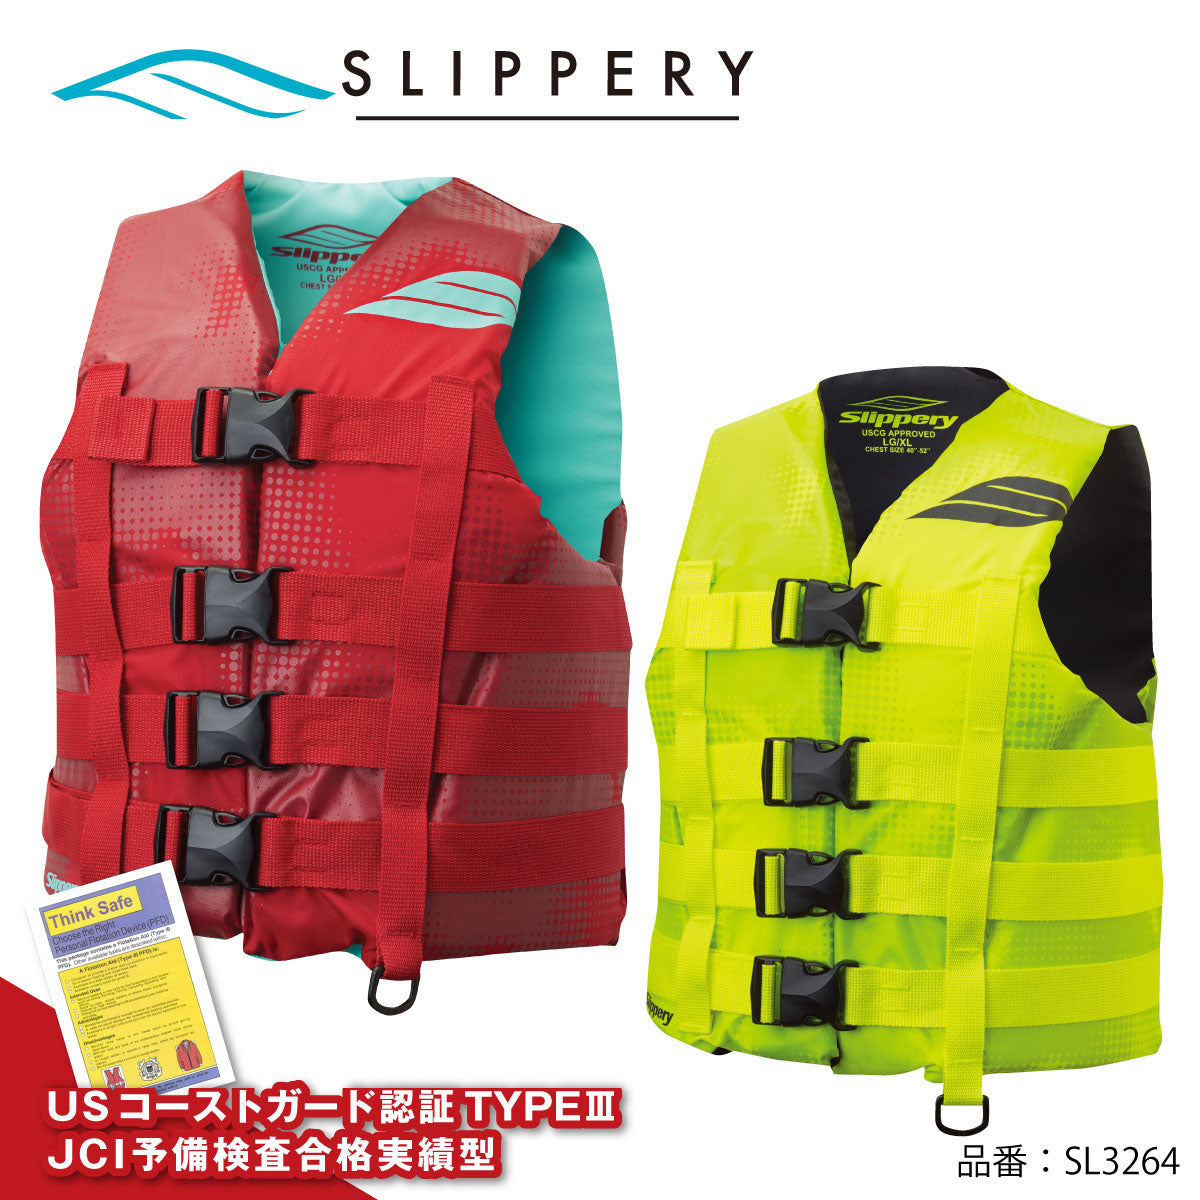 SLIPPERY Life Jacket, Special for Small Ships, JCI Preliminary